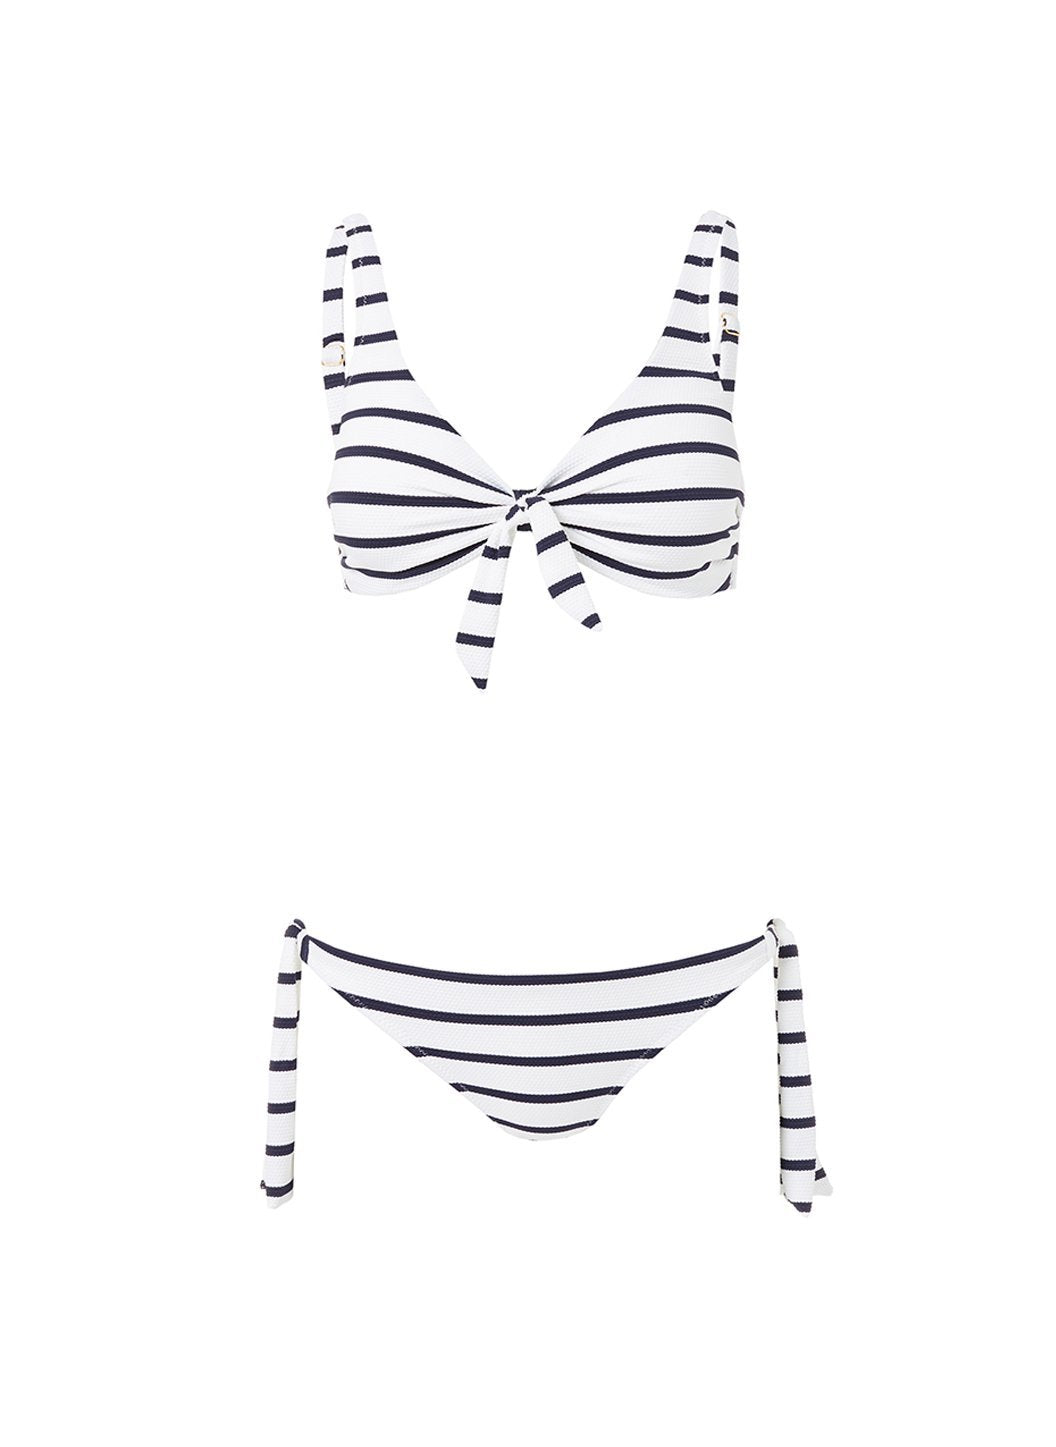 sanjuan marine overtheshoulder knot supportove bikini 2019